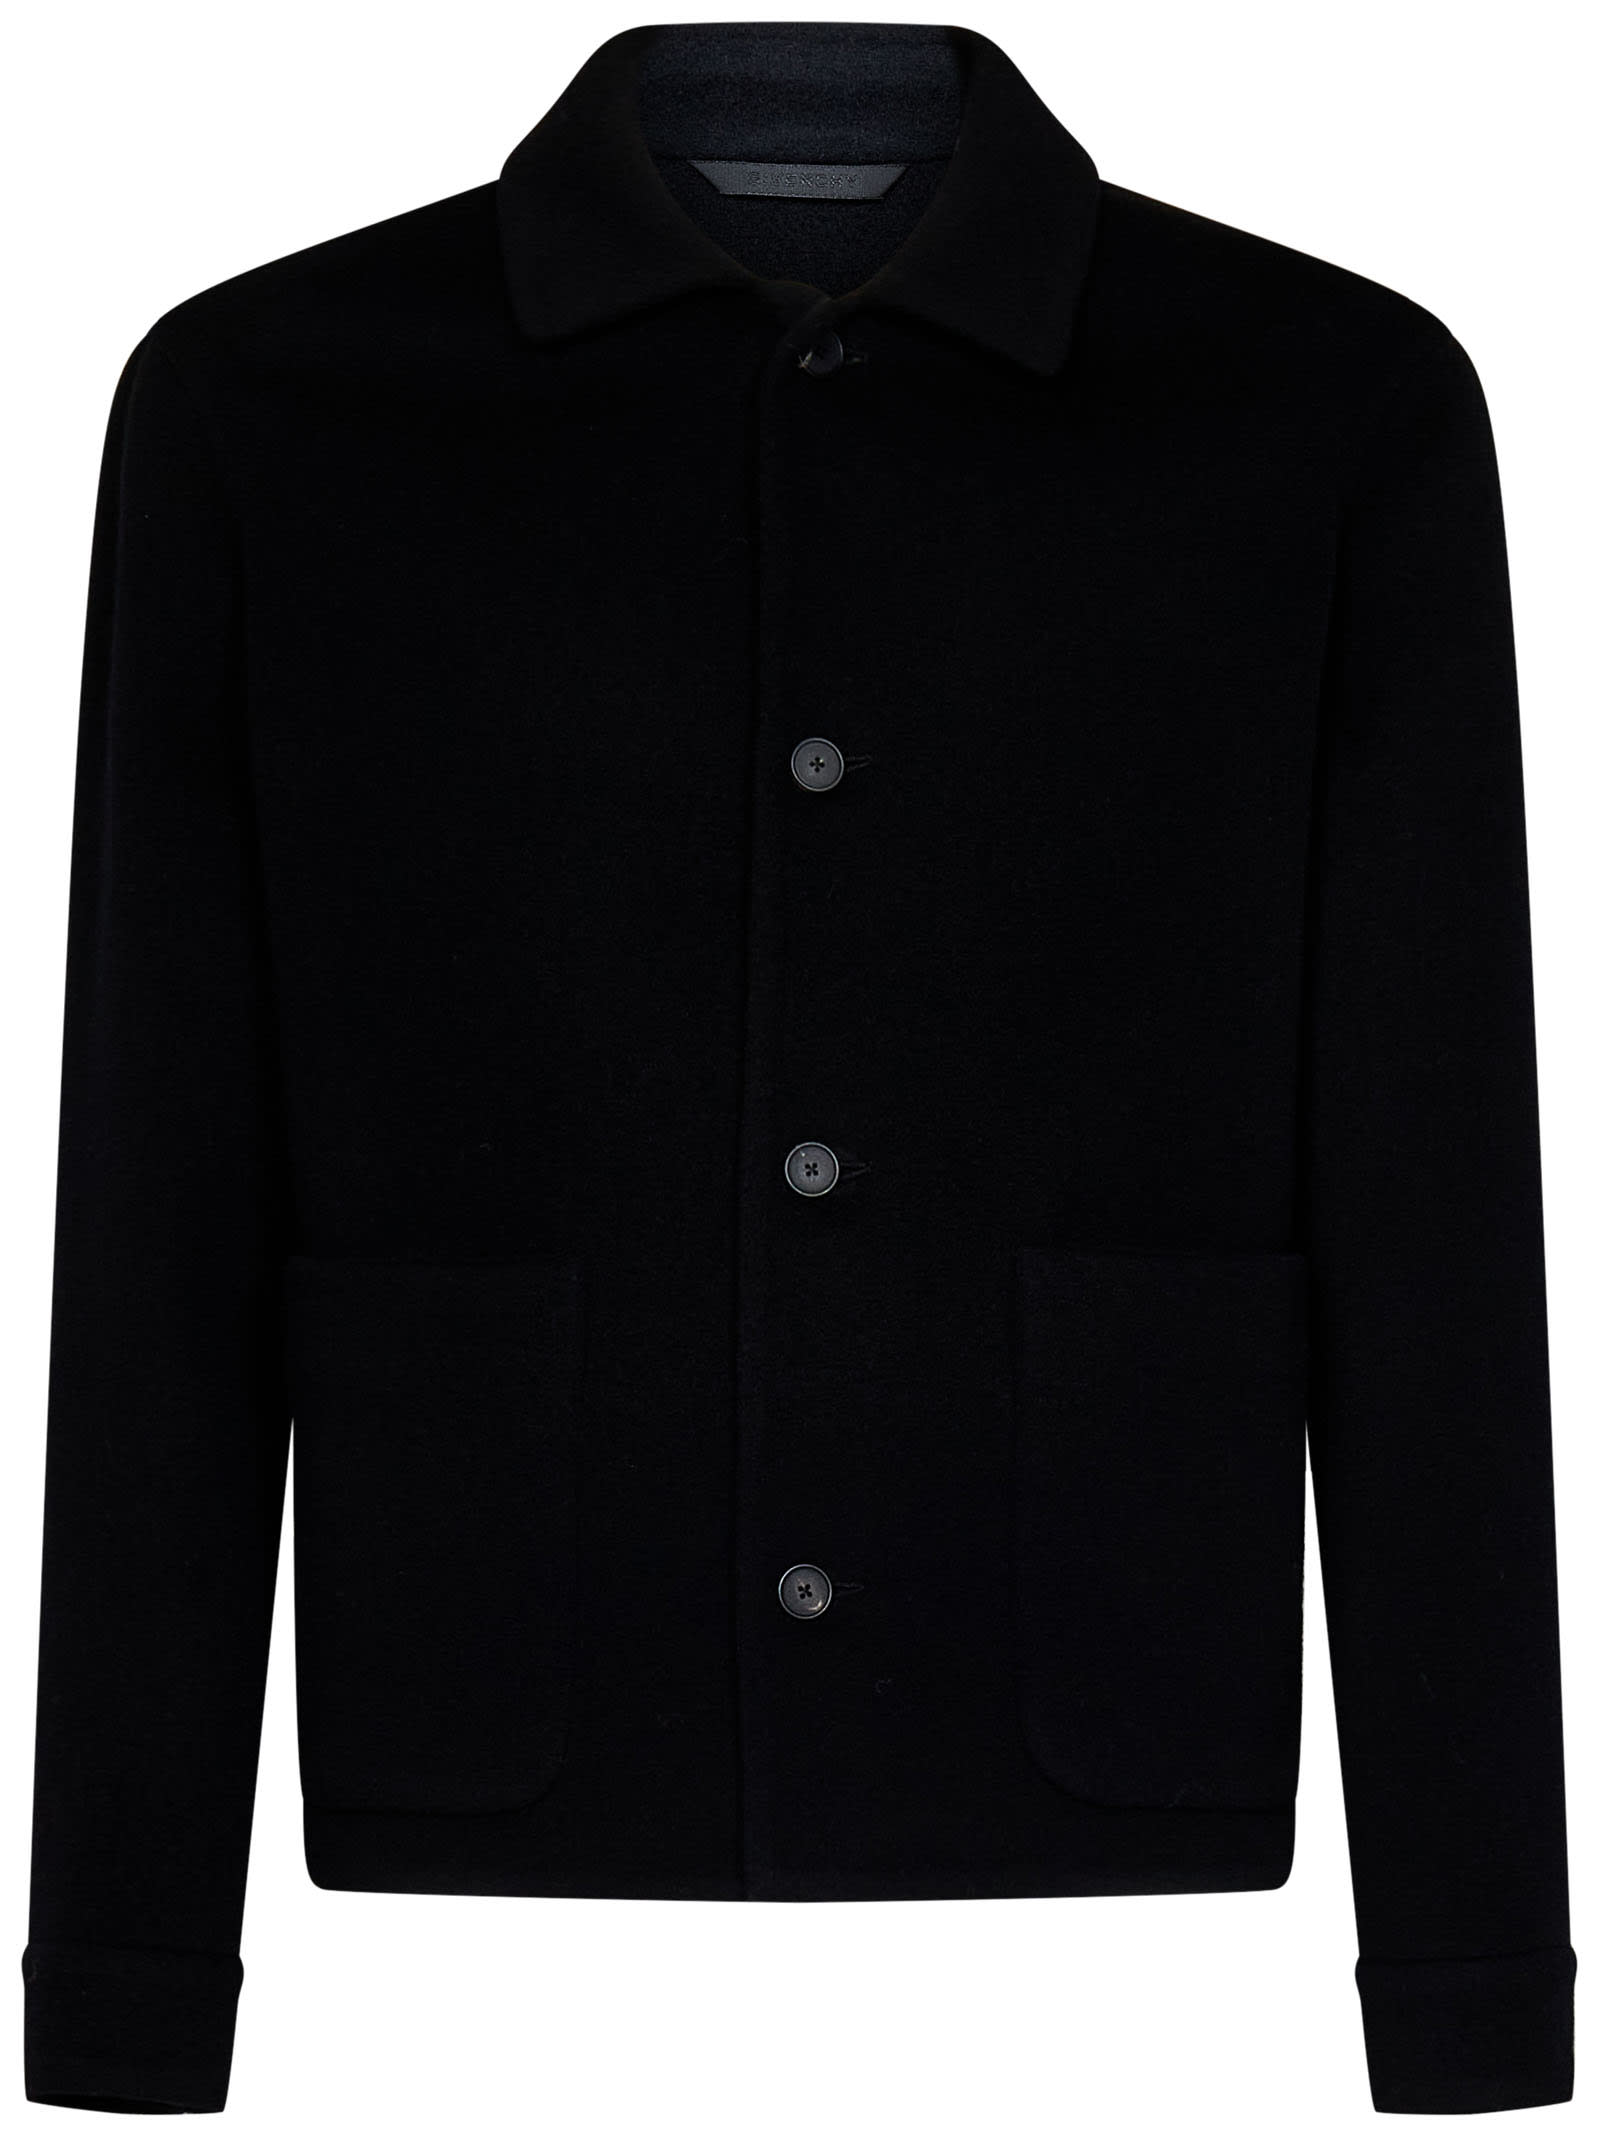 Monsieur by Givenchy Jacket 41 Long Tan + Dark Green + Black Weave 100%  Wool | eBay